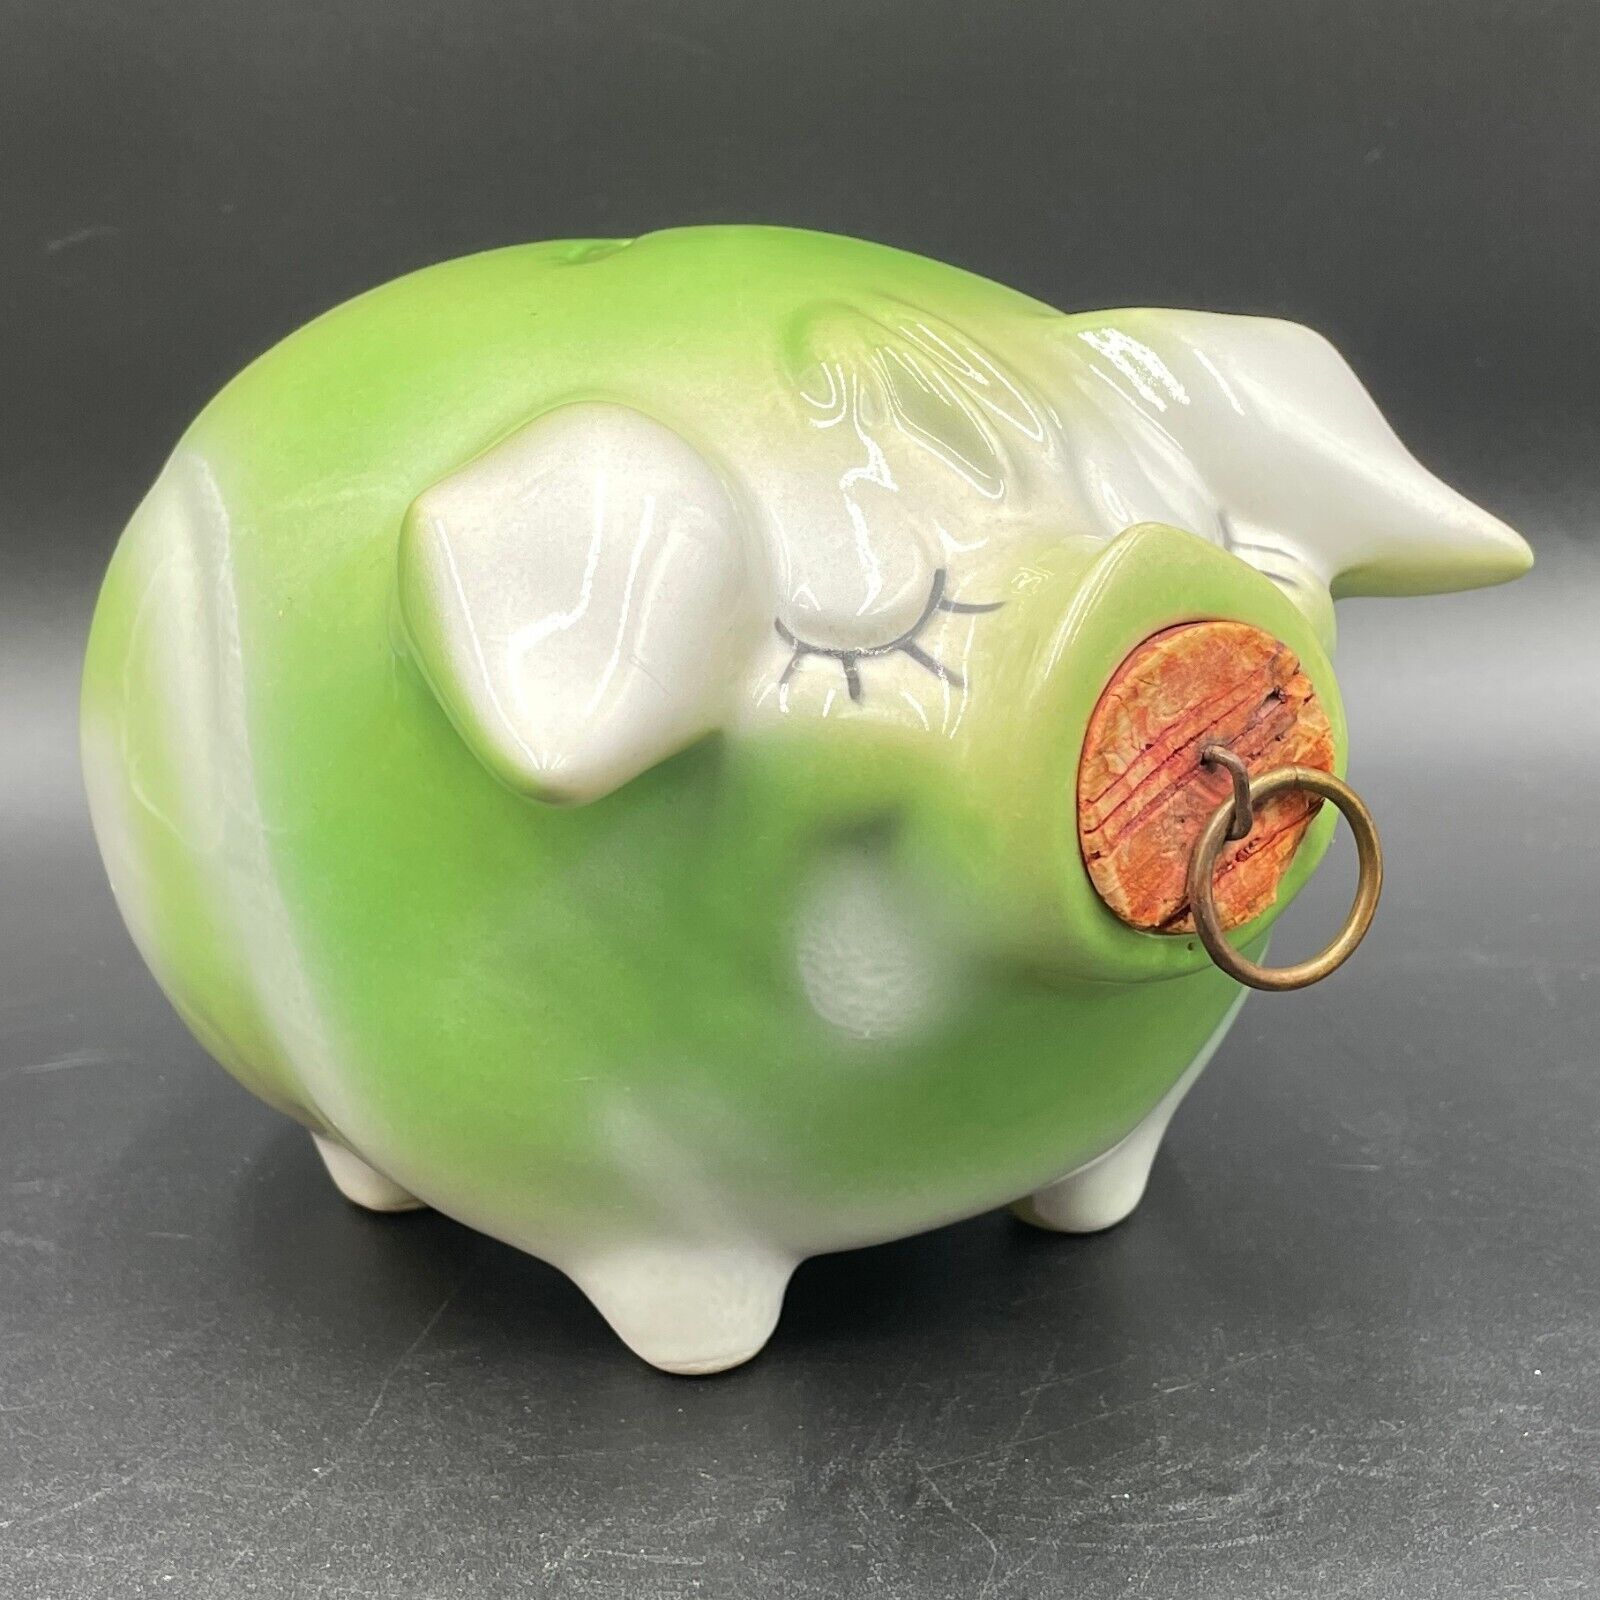 Vintage Corky Pig Piggy Bank by Hull Pottery - Green & White Glaze With Cork